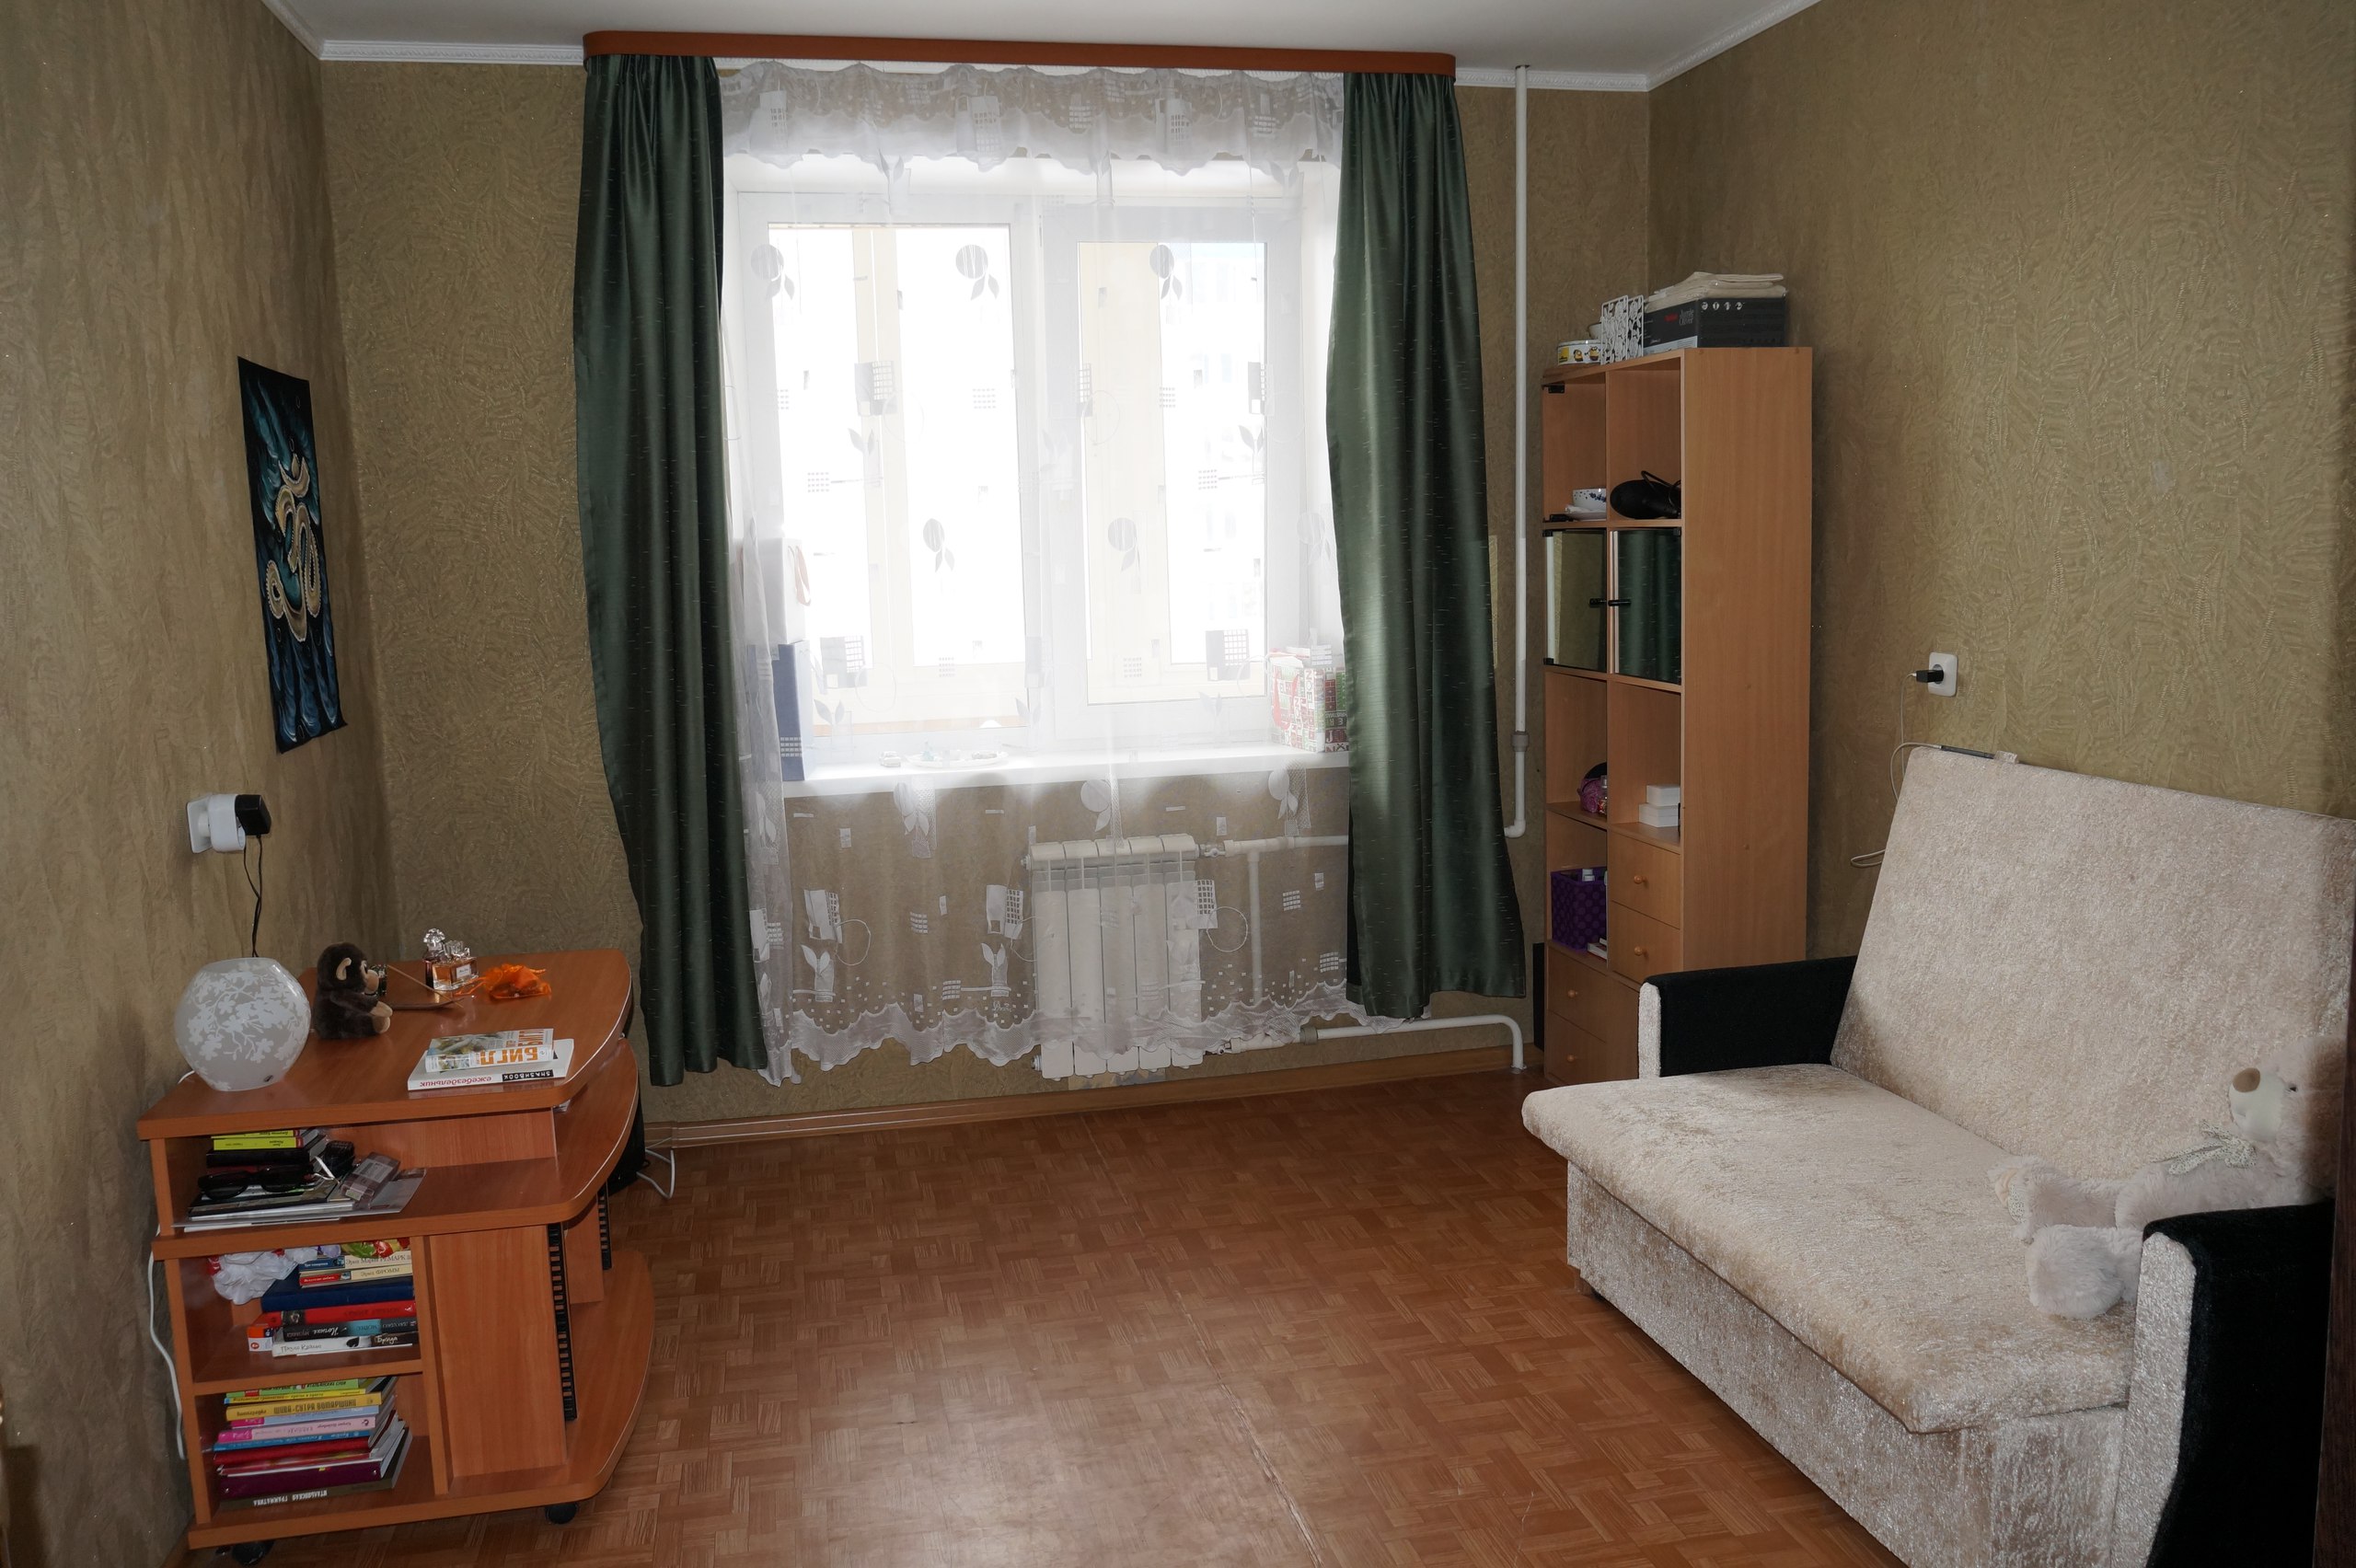 Продажа квартир в санкт петербурге вторичка недорого без посредников с фото на авито